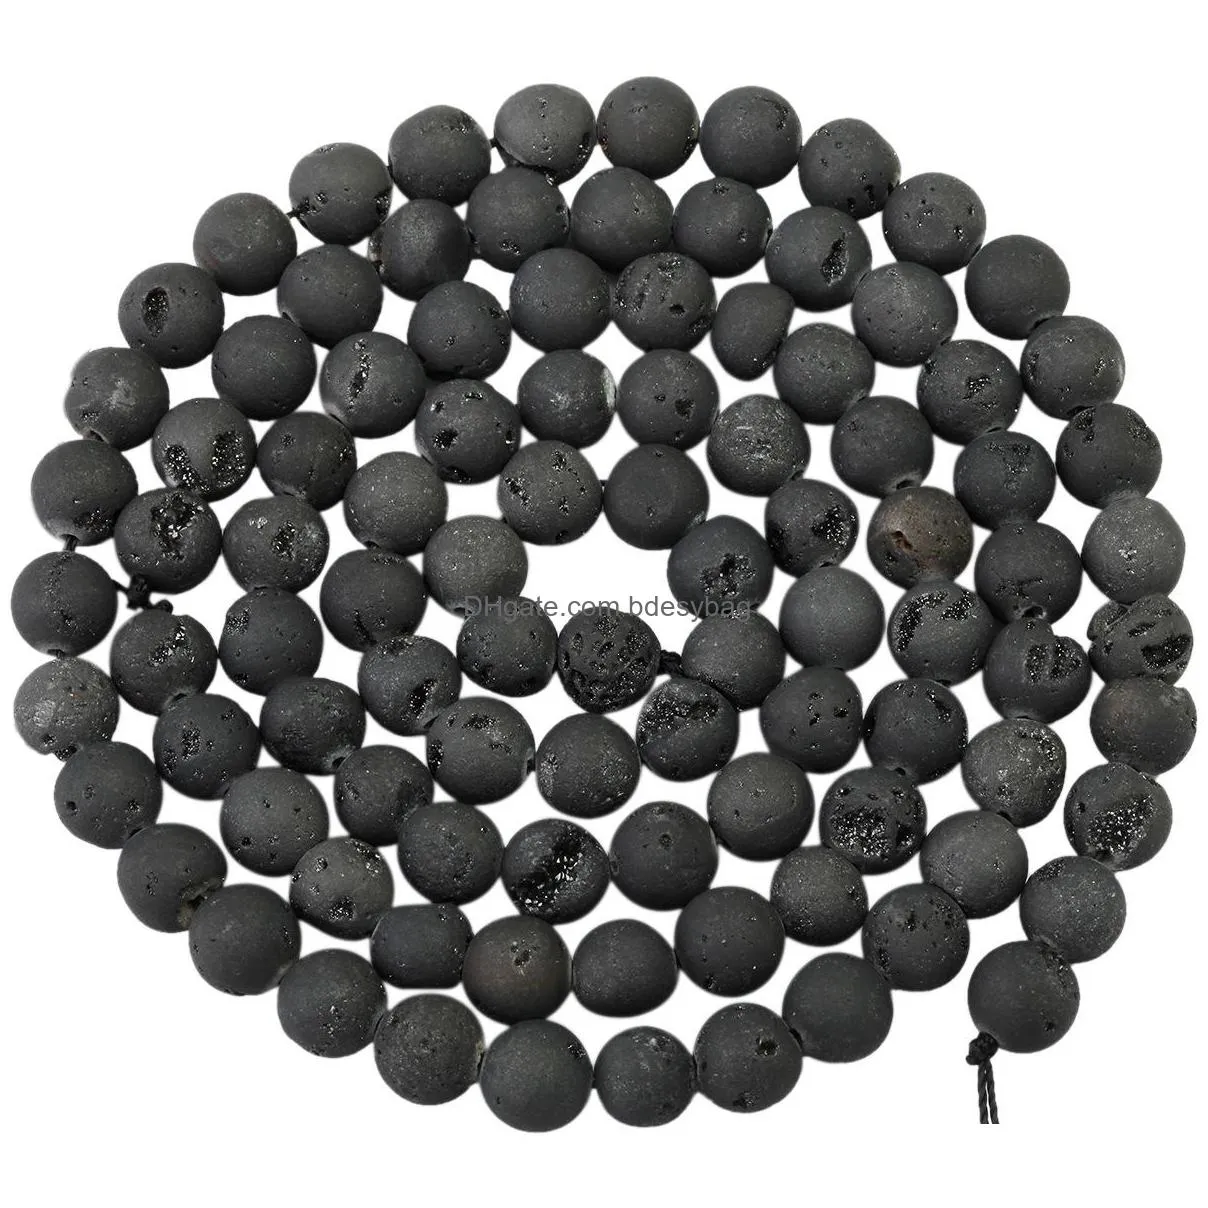 8mm druzy agate crystal round beads 48pcs dursy quartz organic gemstone spherical energy stone healing power for jewelry bracelet mala necklace making 1